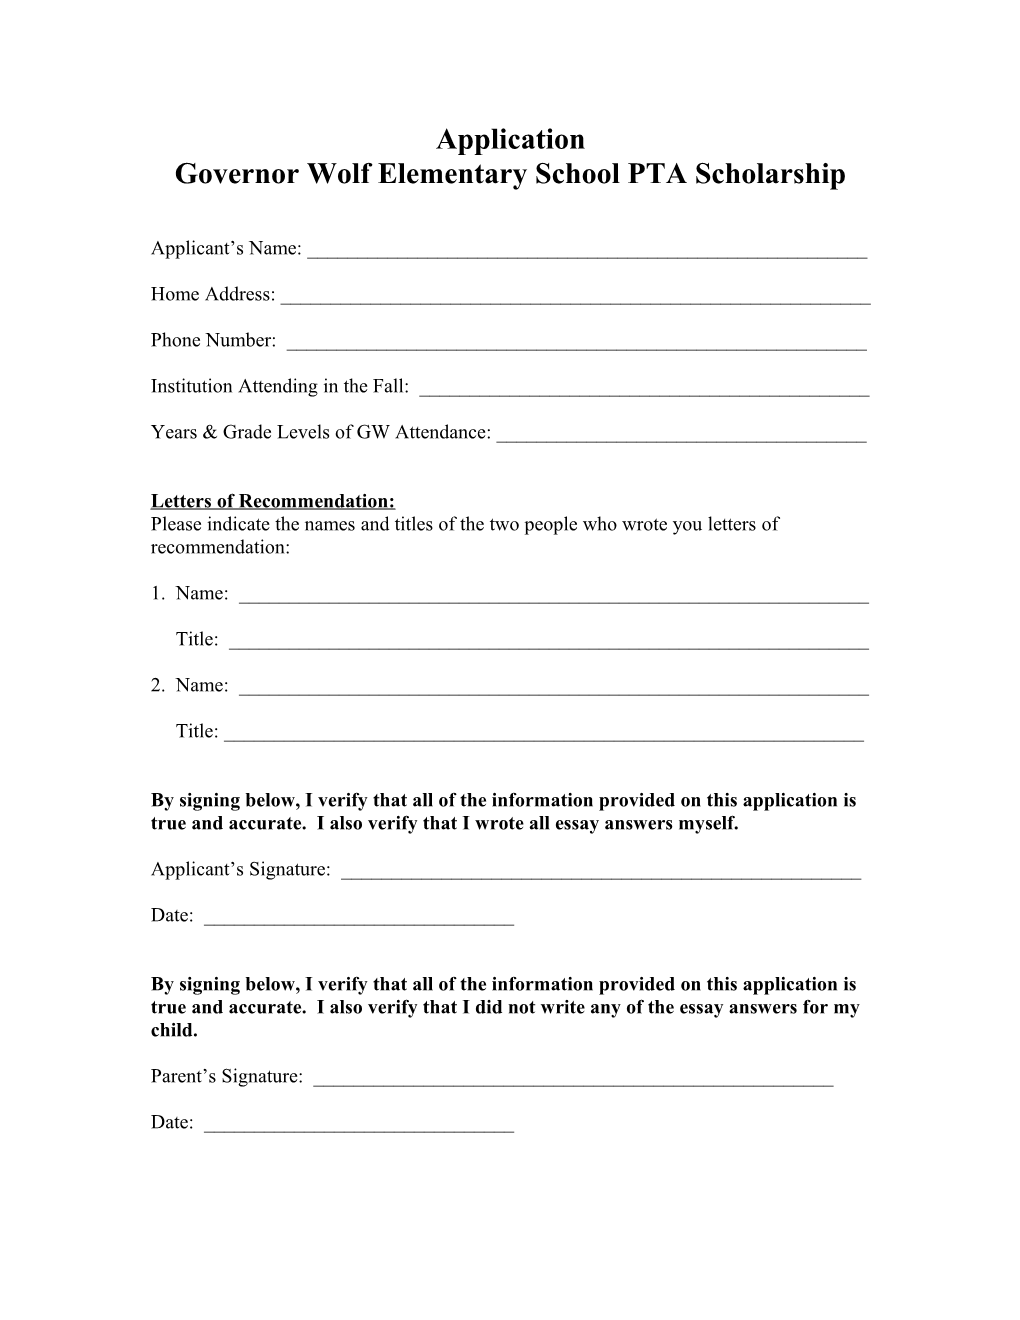 Governor Wolf Elementary School PTA